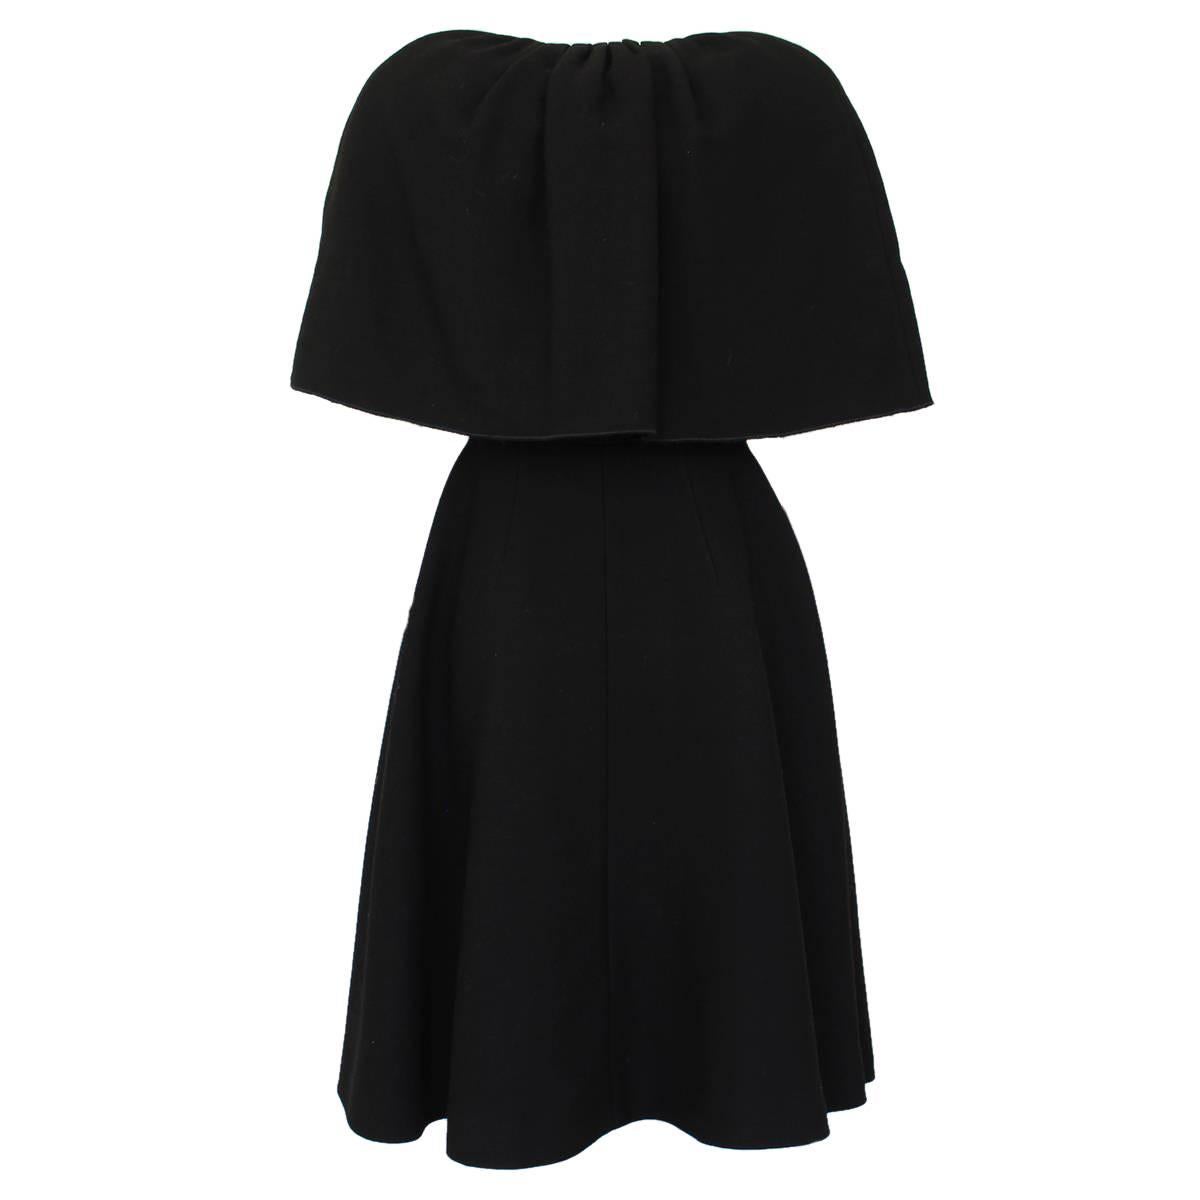 Wonderful Dolce & Gabbana coat
Wool
Black color
Sleeveless
